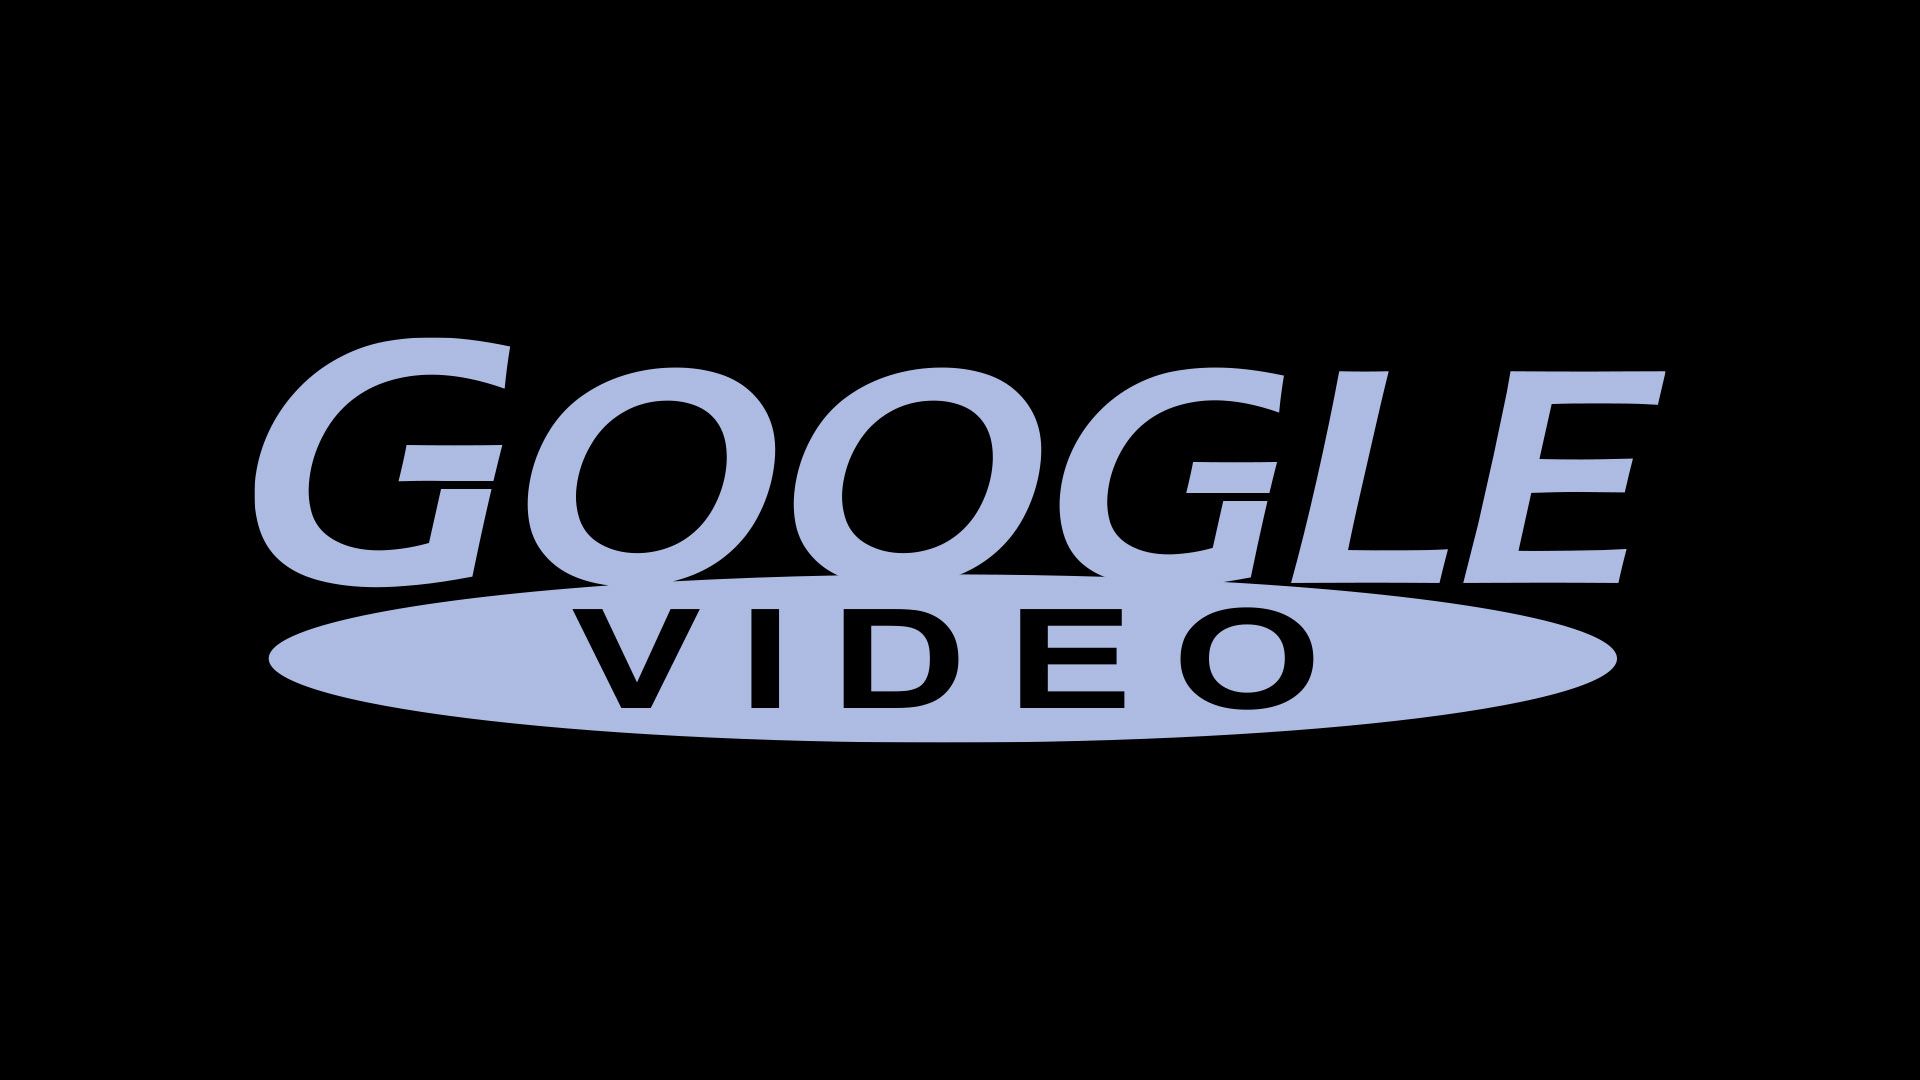 Google's 'DVD Screensaver' Easter egg makes the logo bounce around